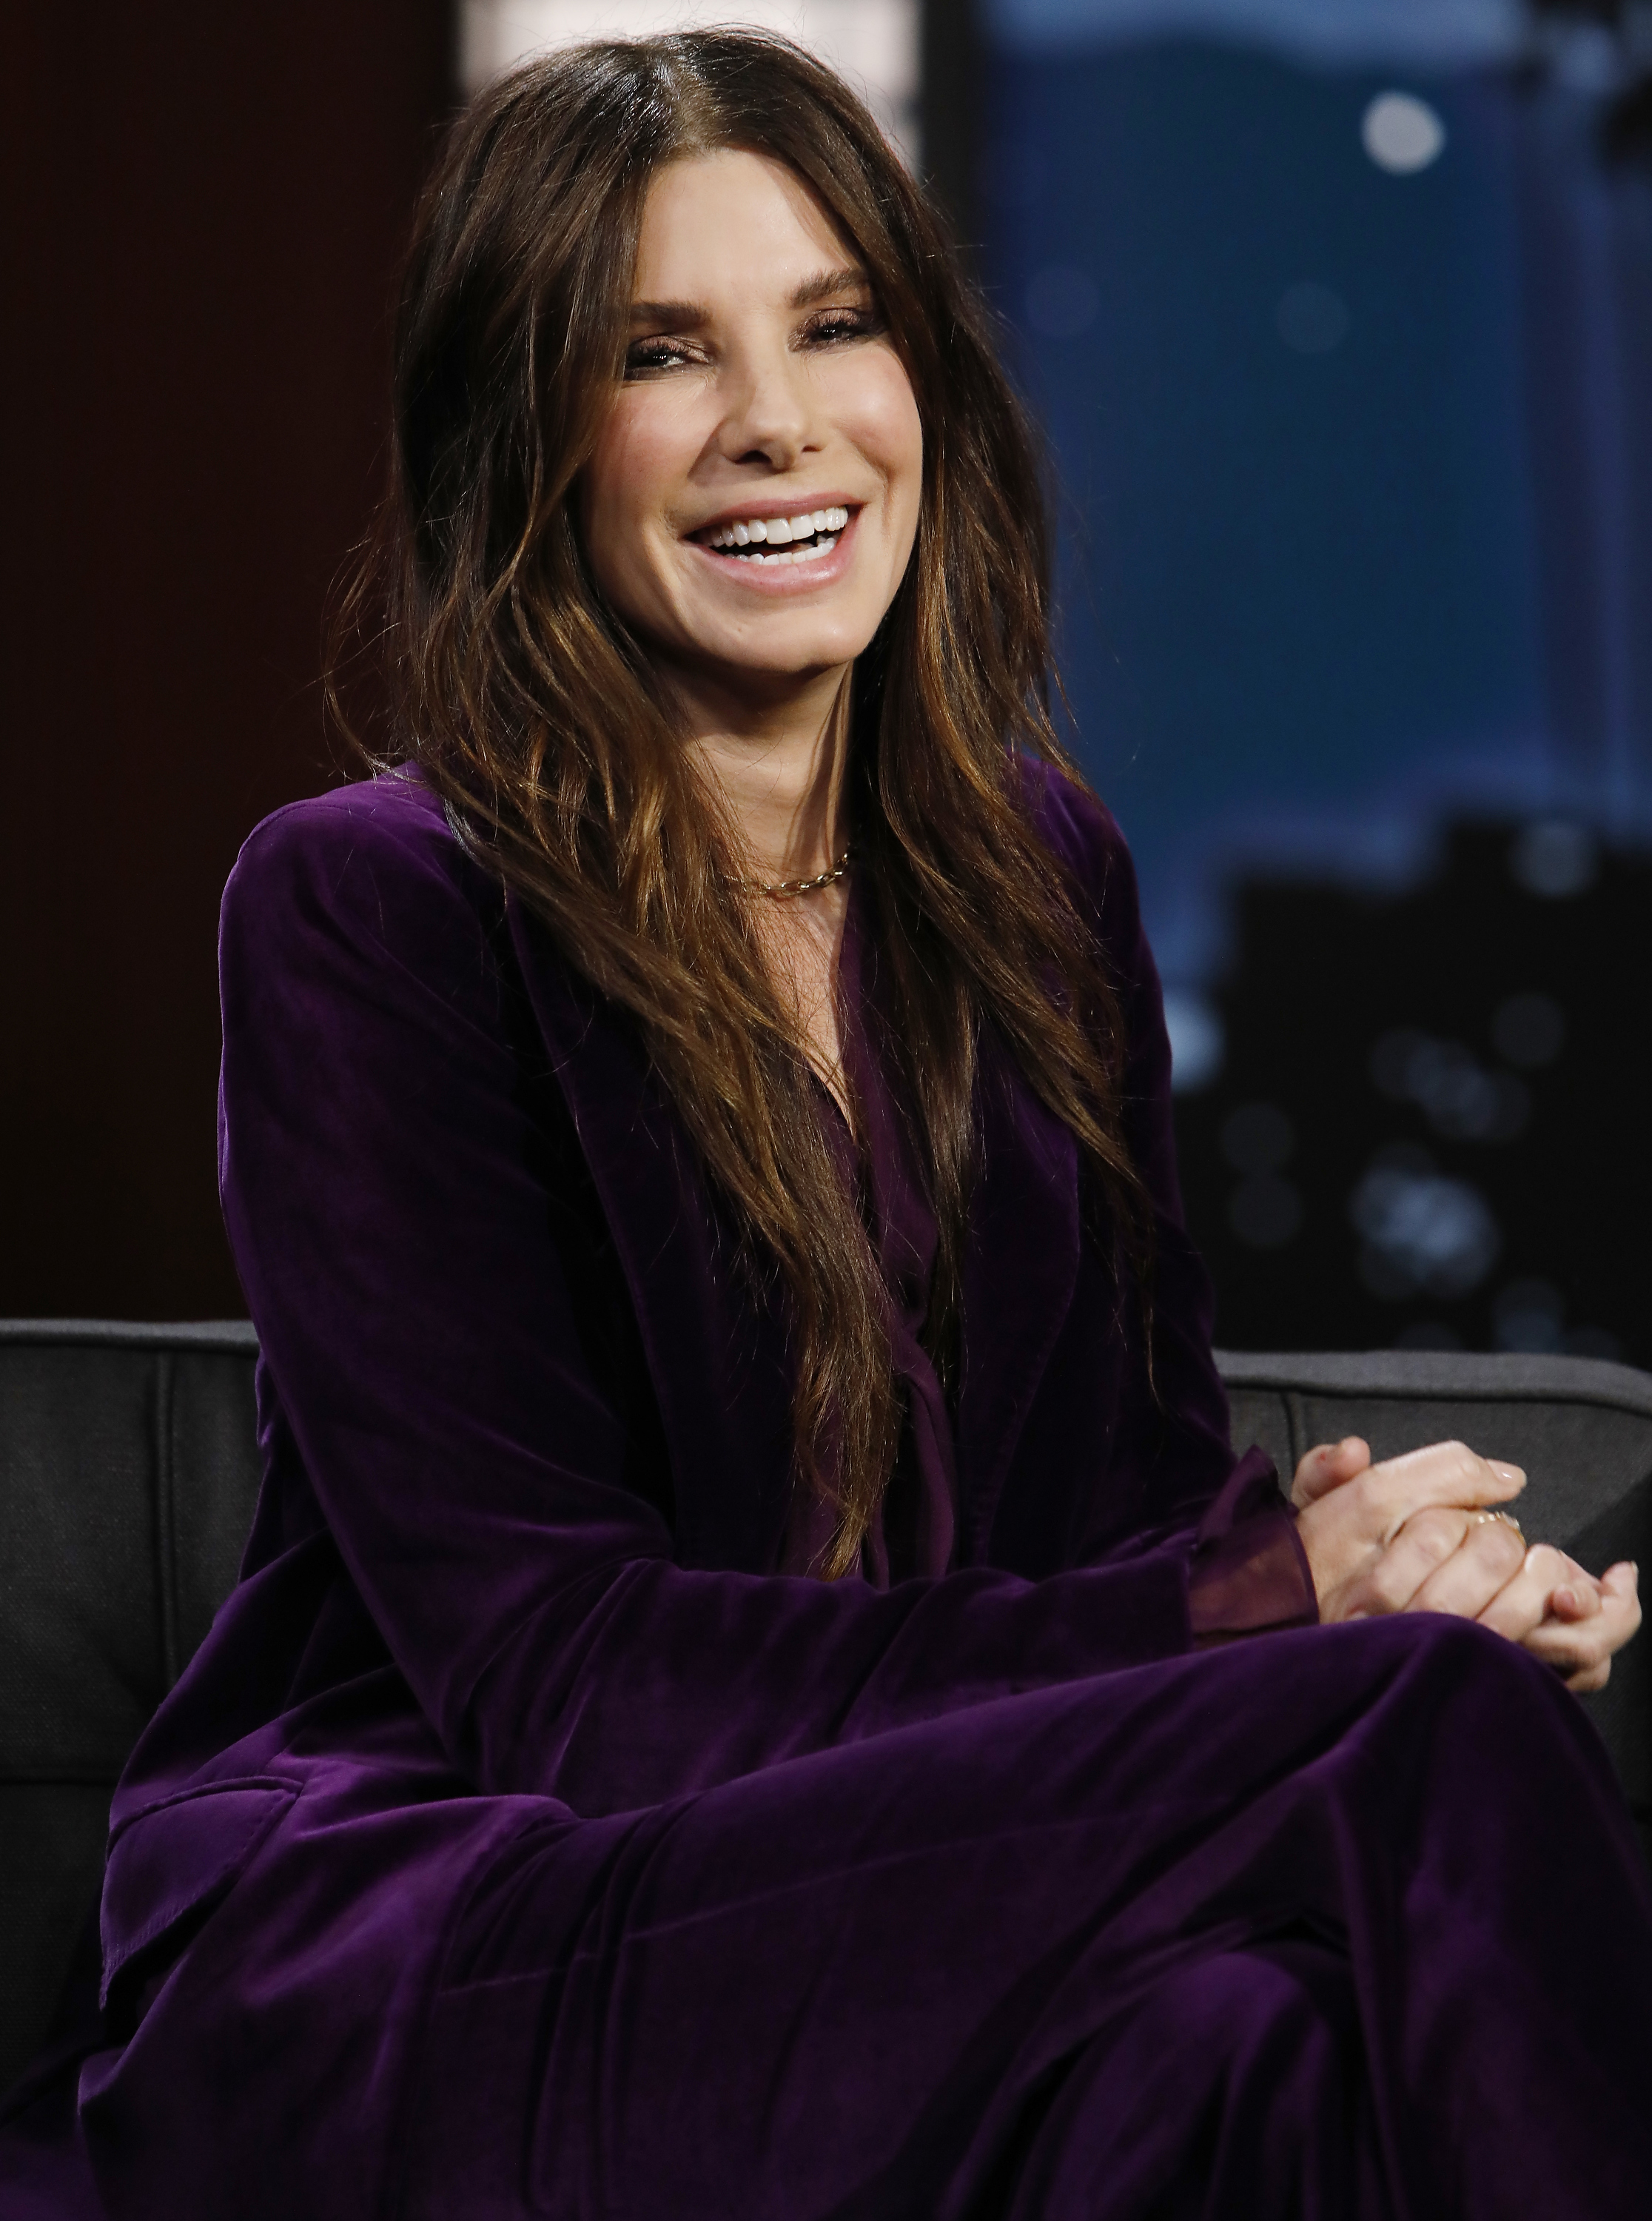 Sandra Bullock on "Jimmy Kimmel Live" season 20 | Source: Getty Images